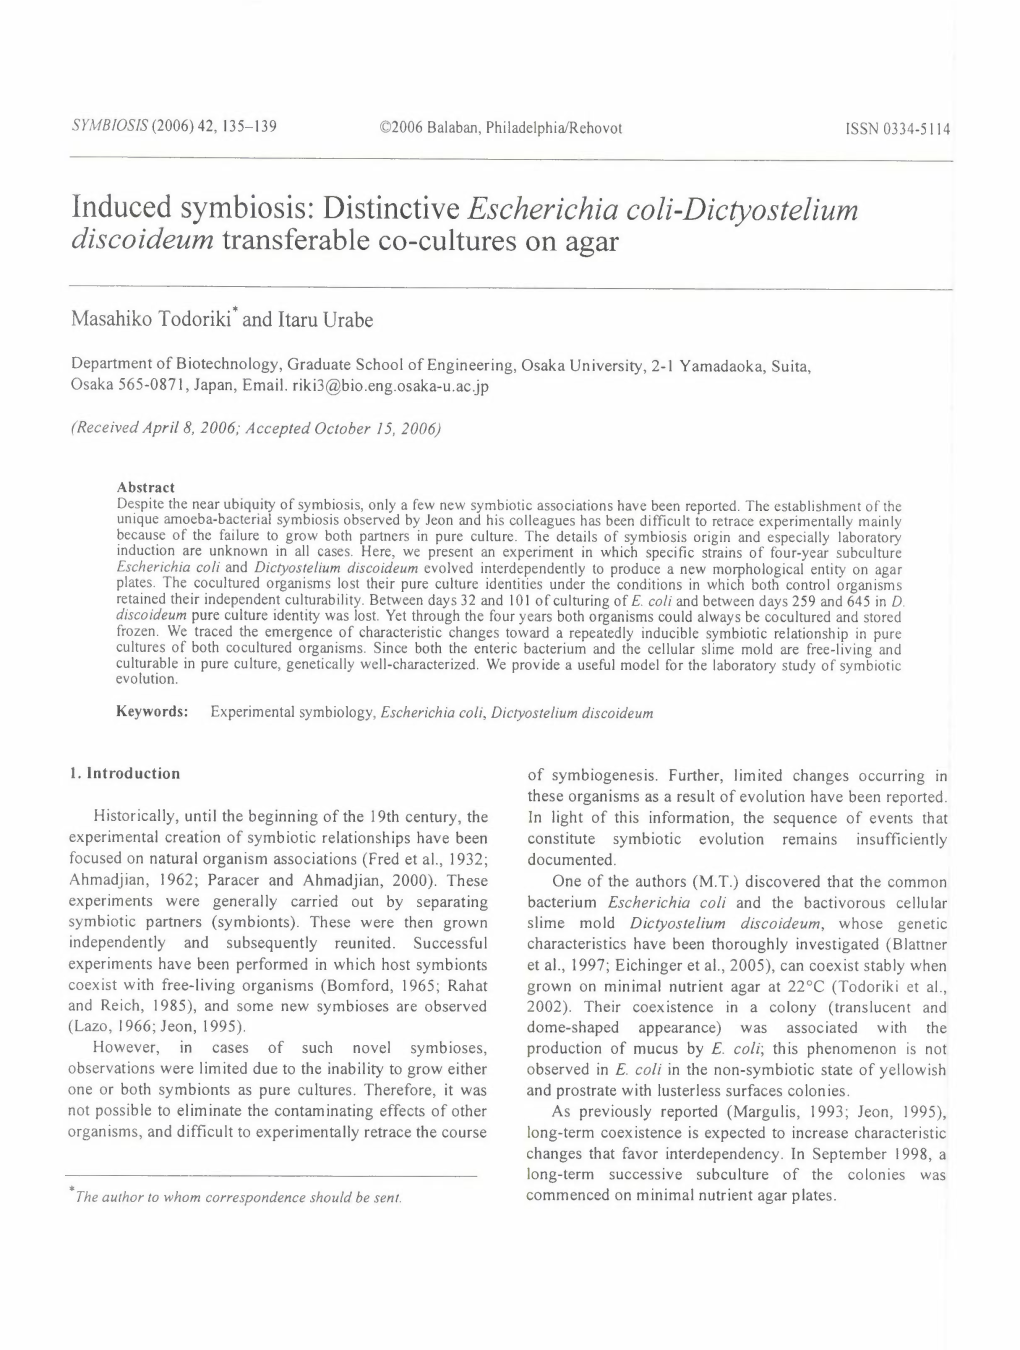 Escherichia Coli-Dictyostelium Discoideum Transferable Co-Cultures on Agar